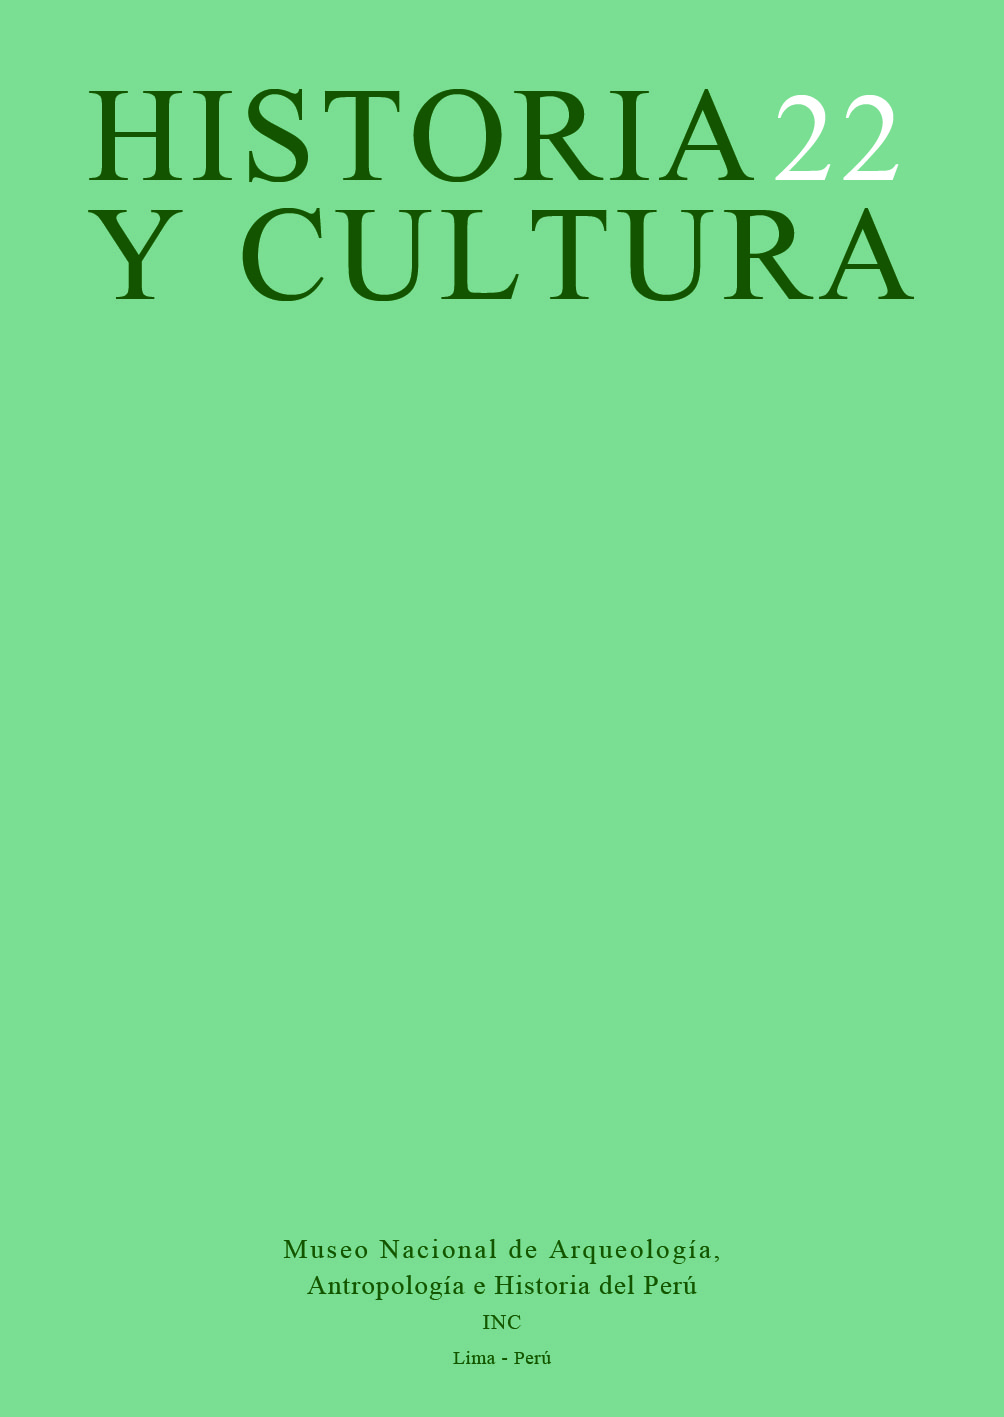 					Ver Núm. 22 (1993): Historia y Cultura 22
				